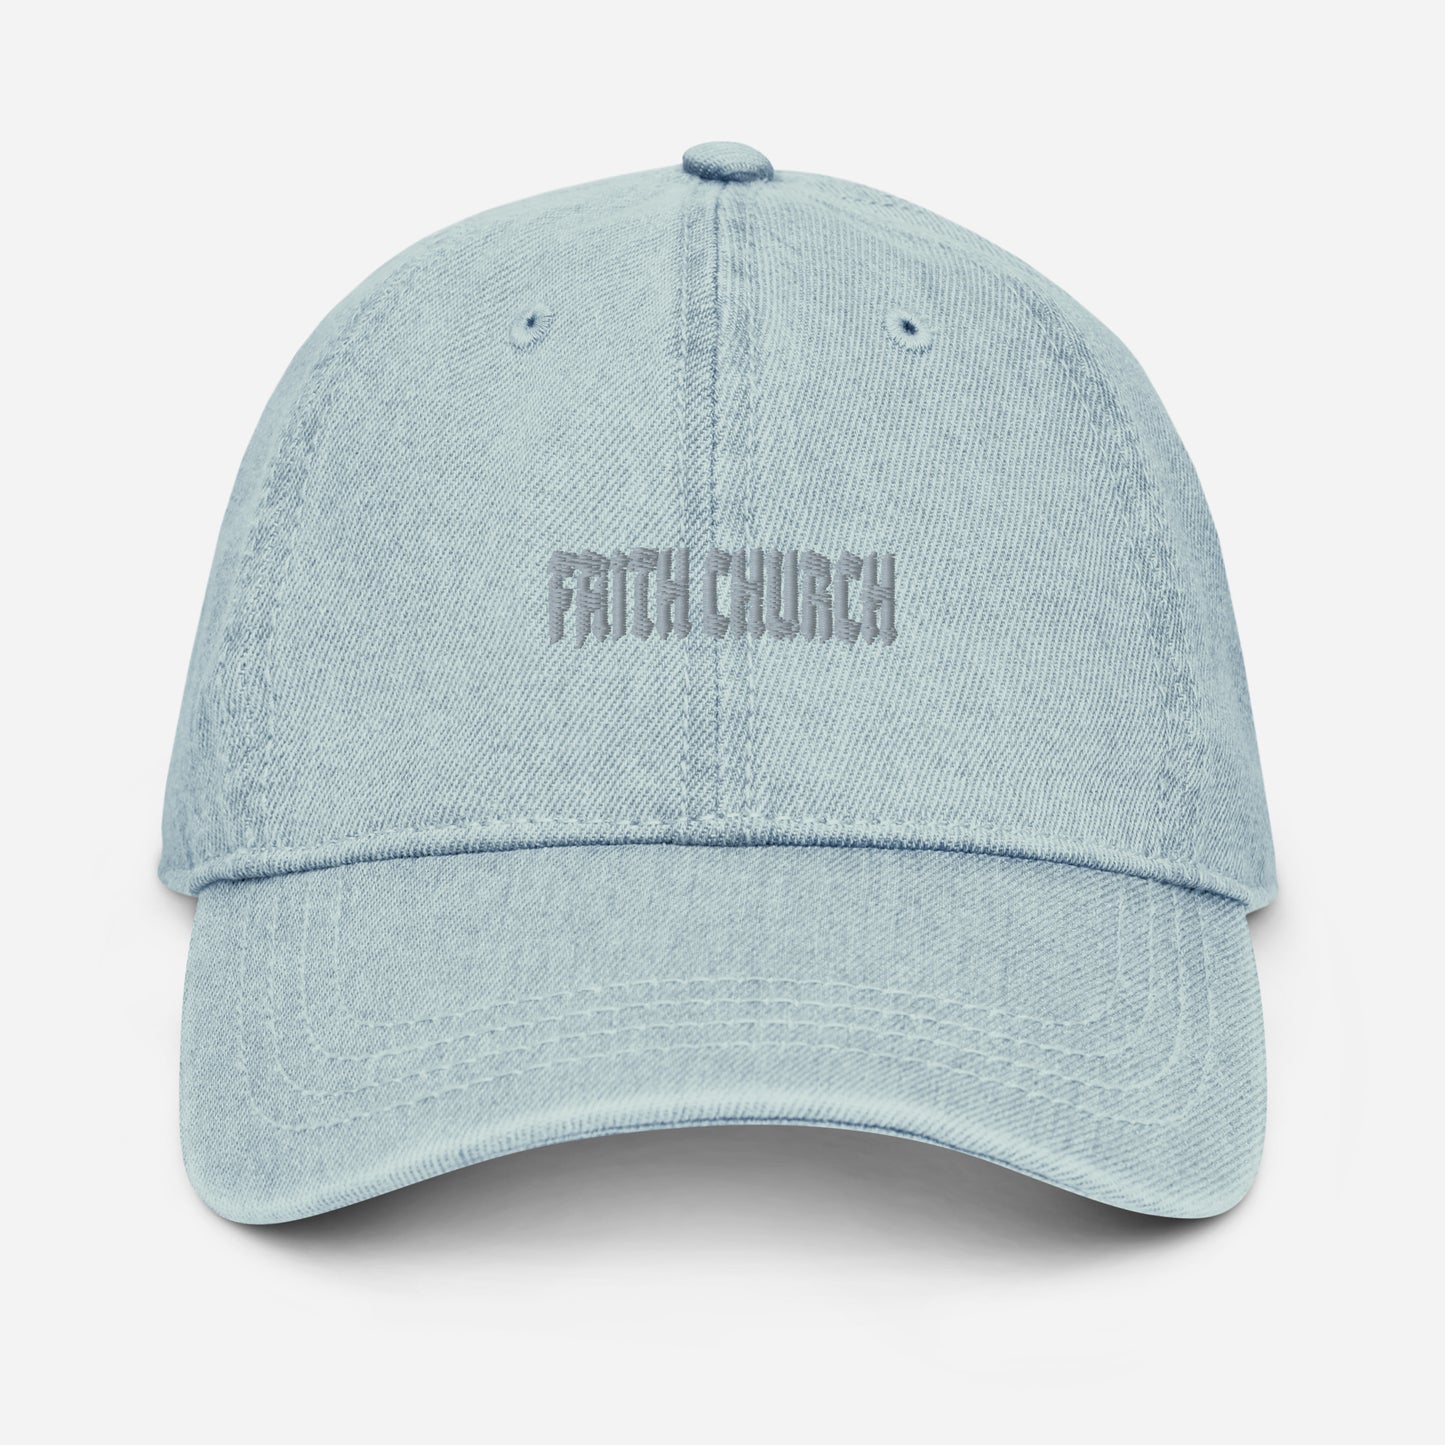 FAITH CHURCH Denim Hat